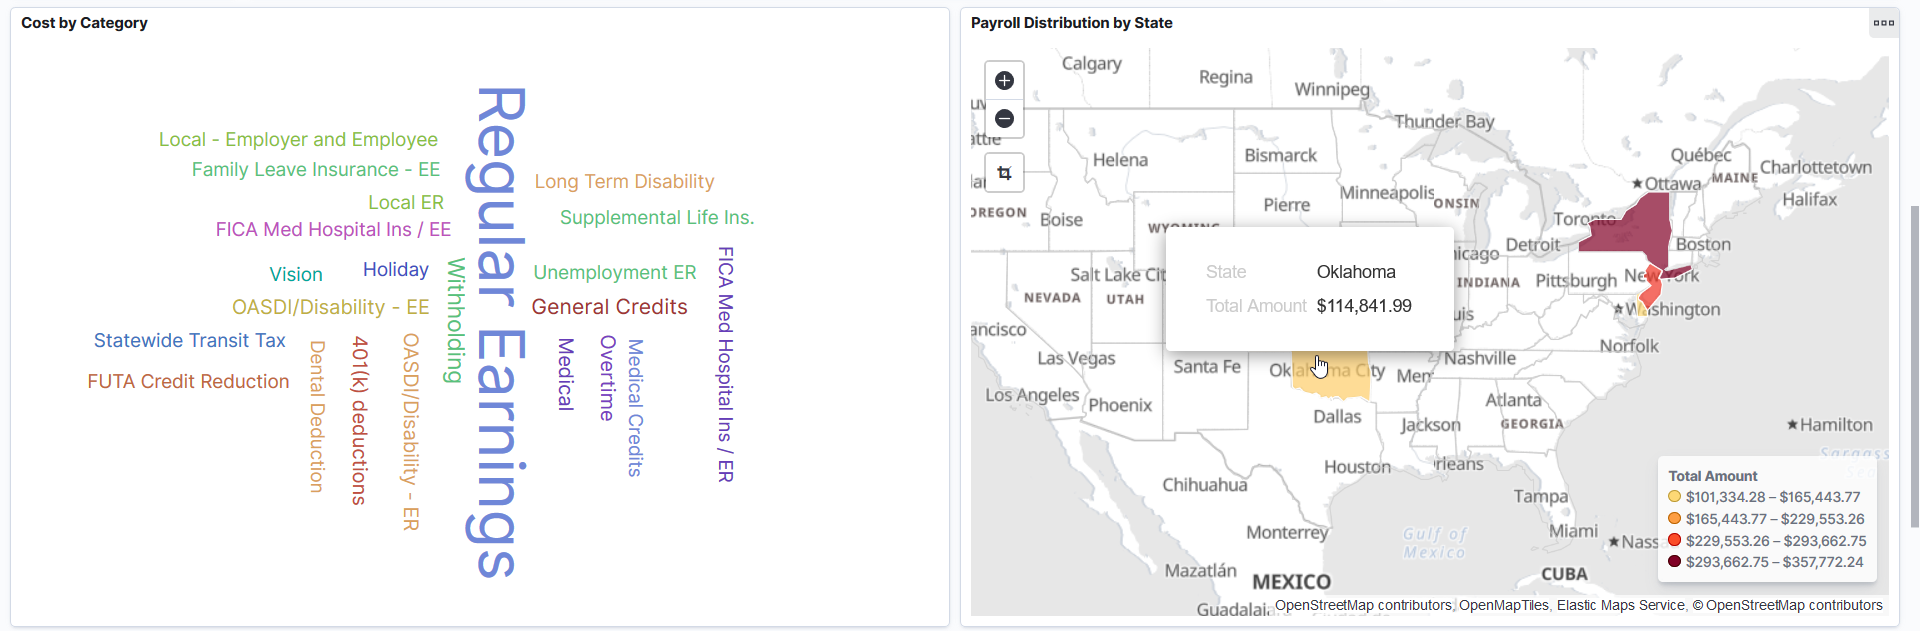 U.S. Payroll Cost Analytics Dashboard (2 of 3)